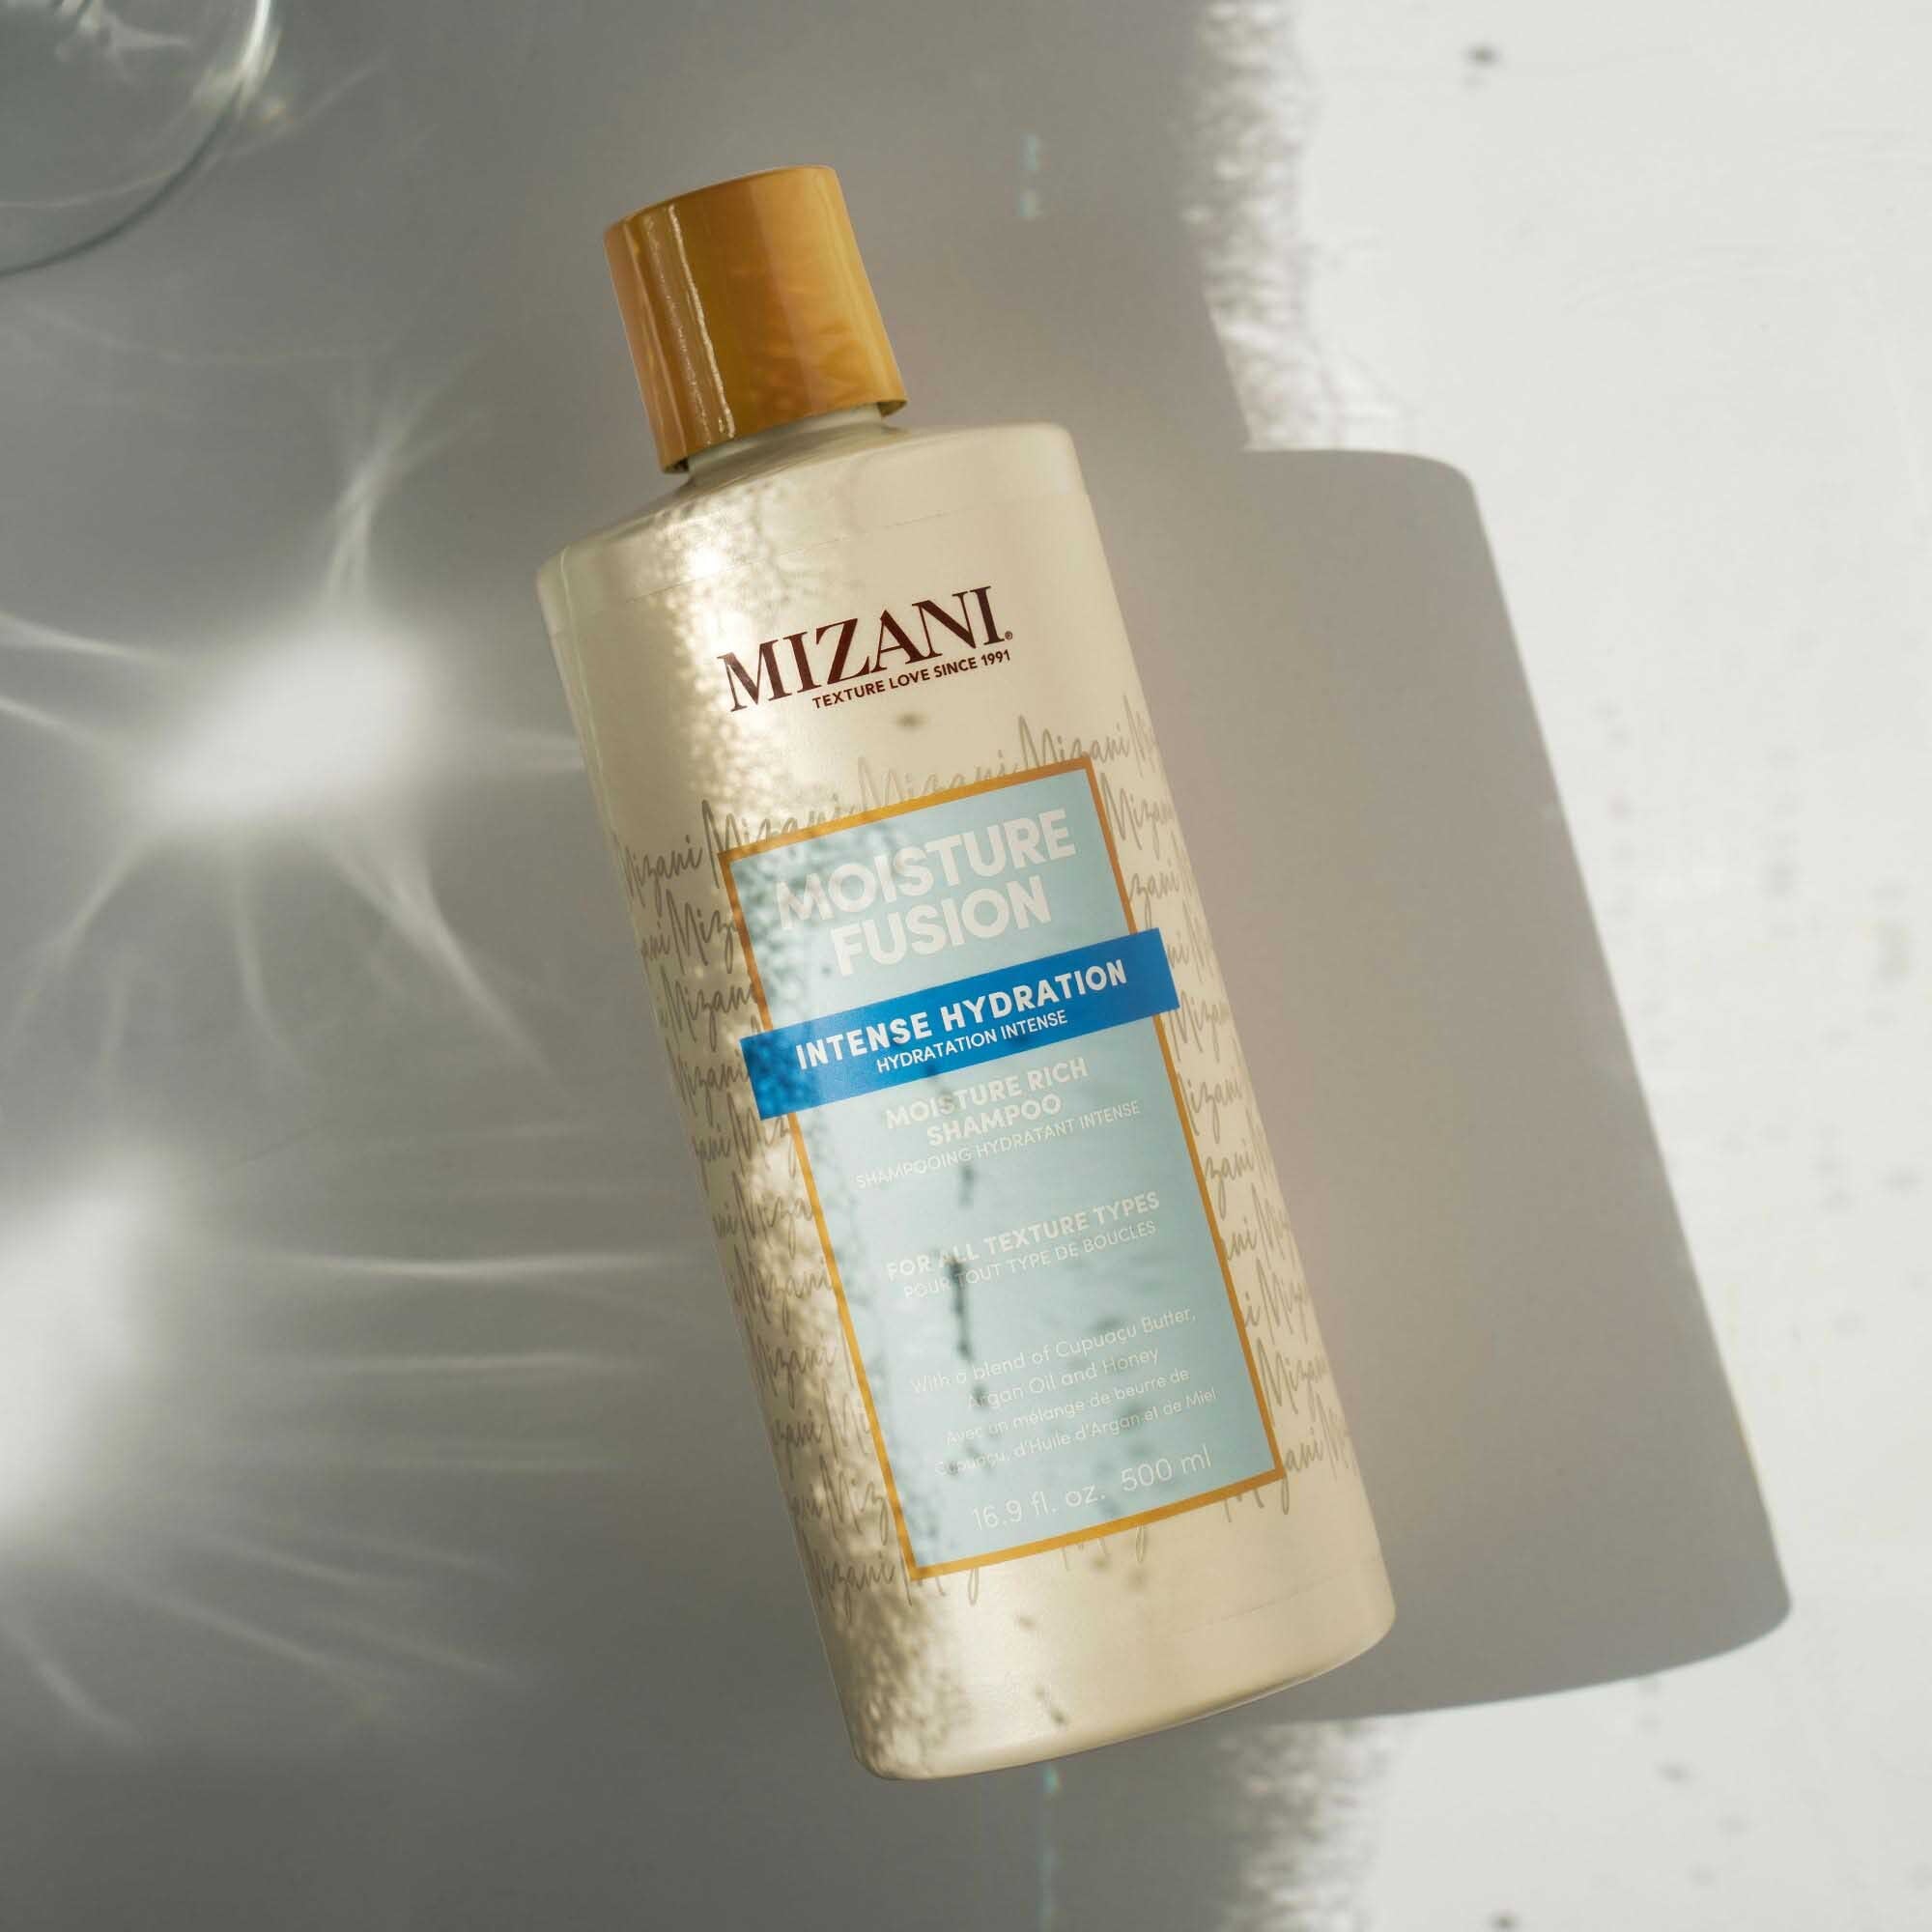 Mizani Moisture Fusion Moisture Rich Shampoo / 16.9OZ